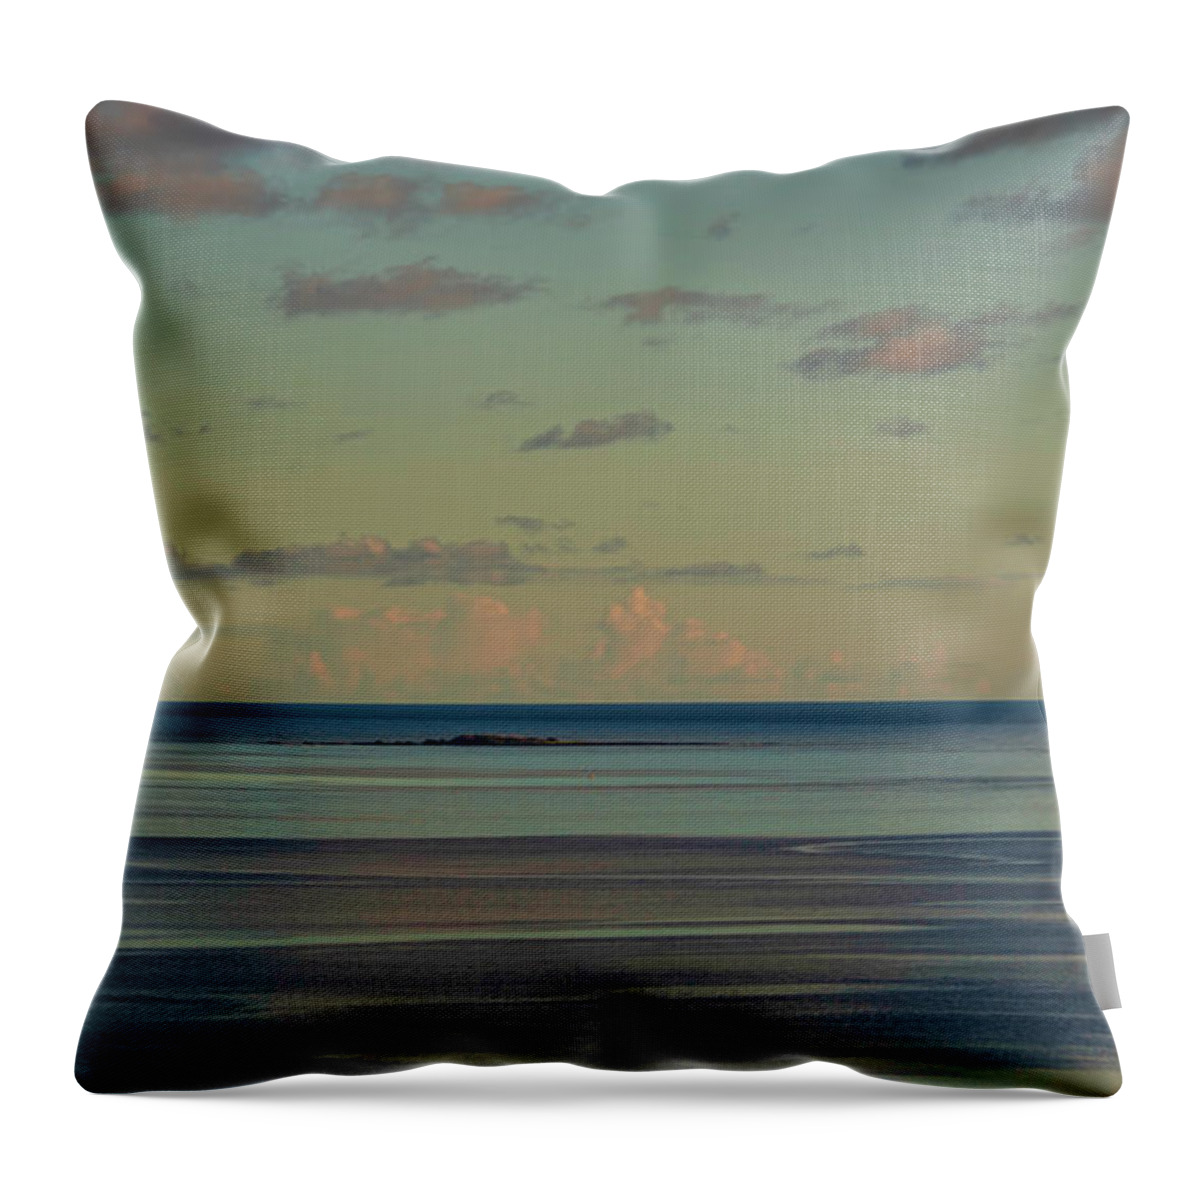 Hawaii Throw Pillow featuring the photograph Kaneohe Bay Panorama Mural 5 of 5 by Dan McManus